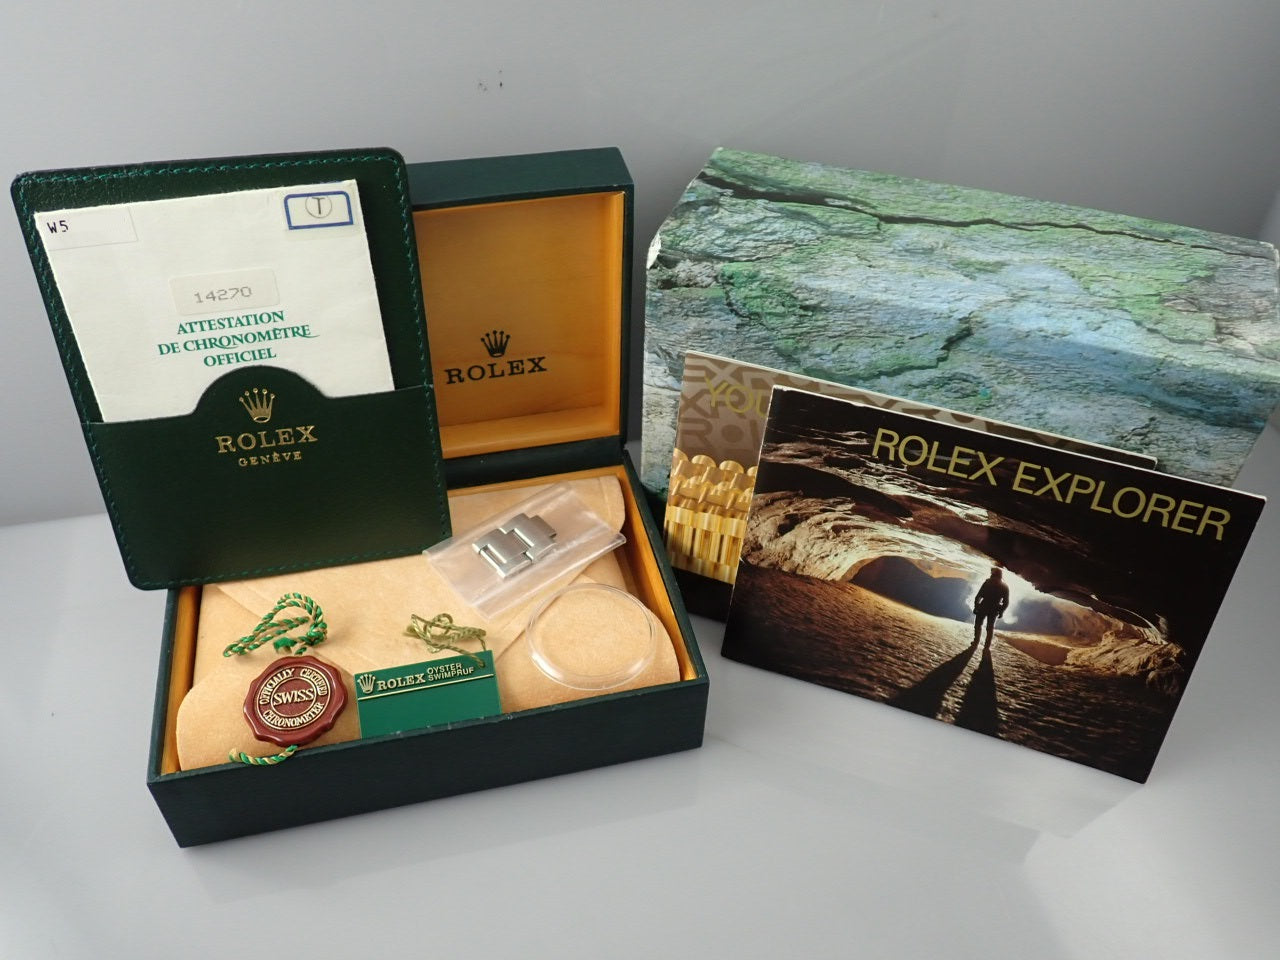 Rolex Explorer W serial number &lt;Warranty, box, etc.&gt;